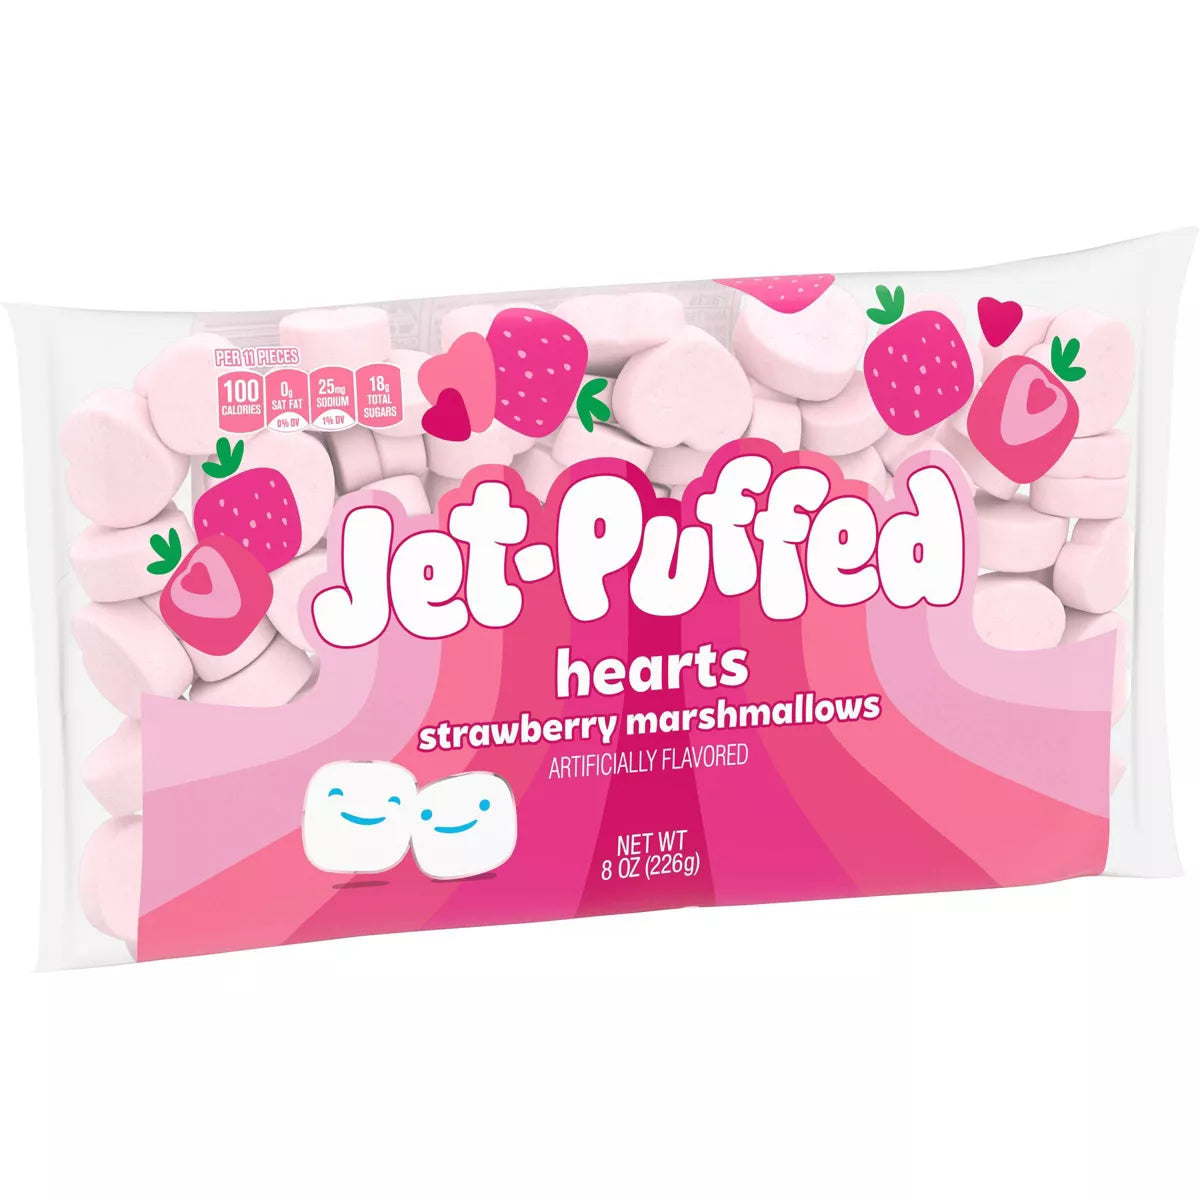 Kraft Jet-Puffed Strawberry Marshmallow Hearts - 8oz - Limited Edition